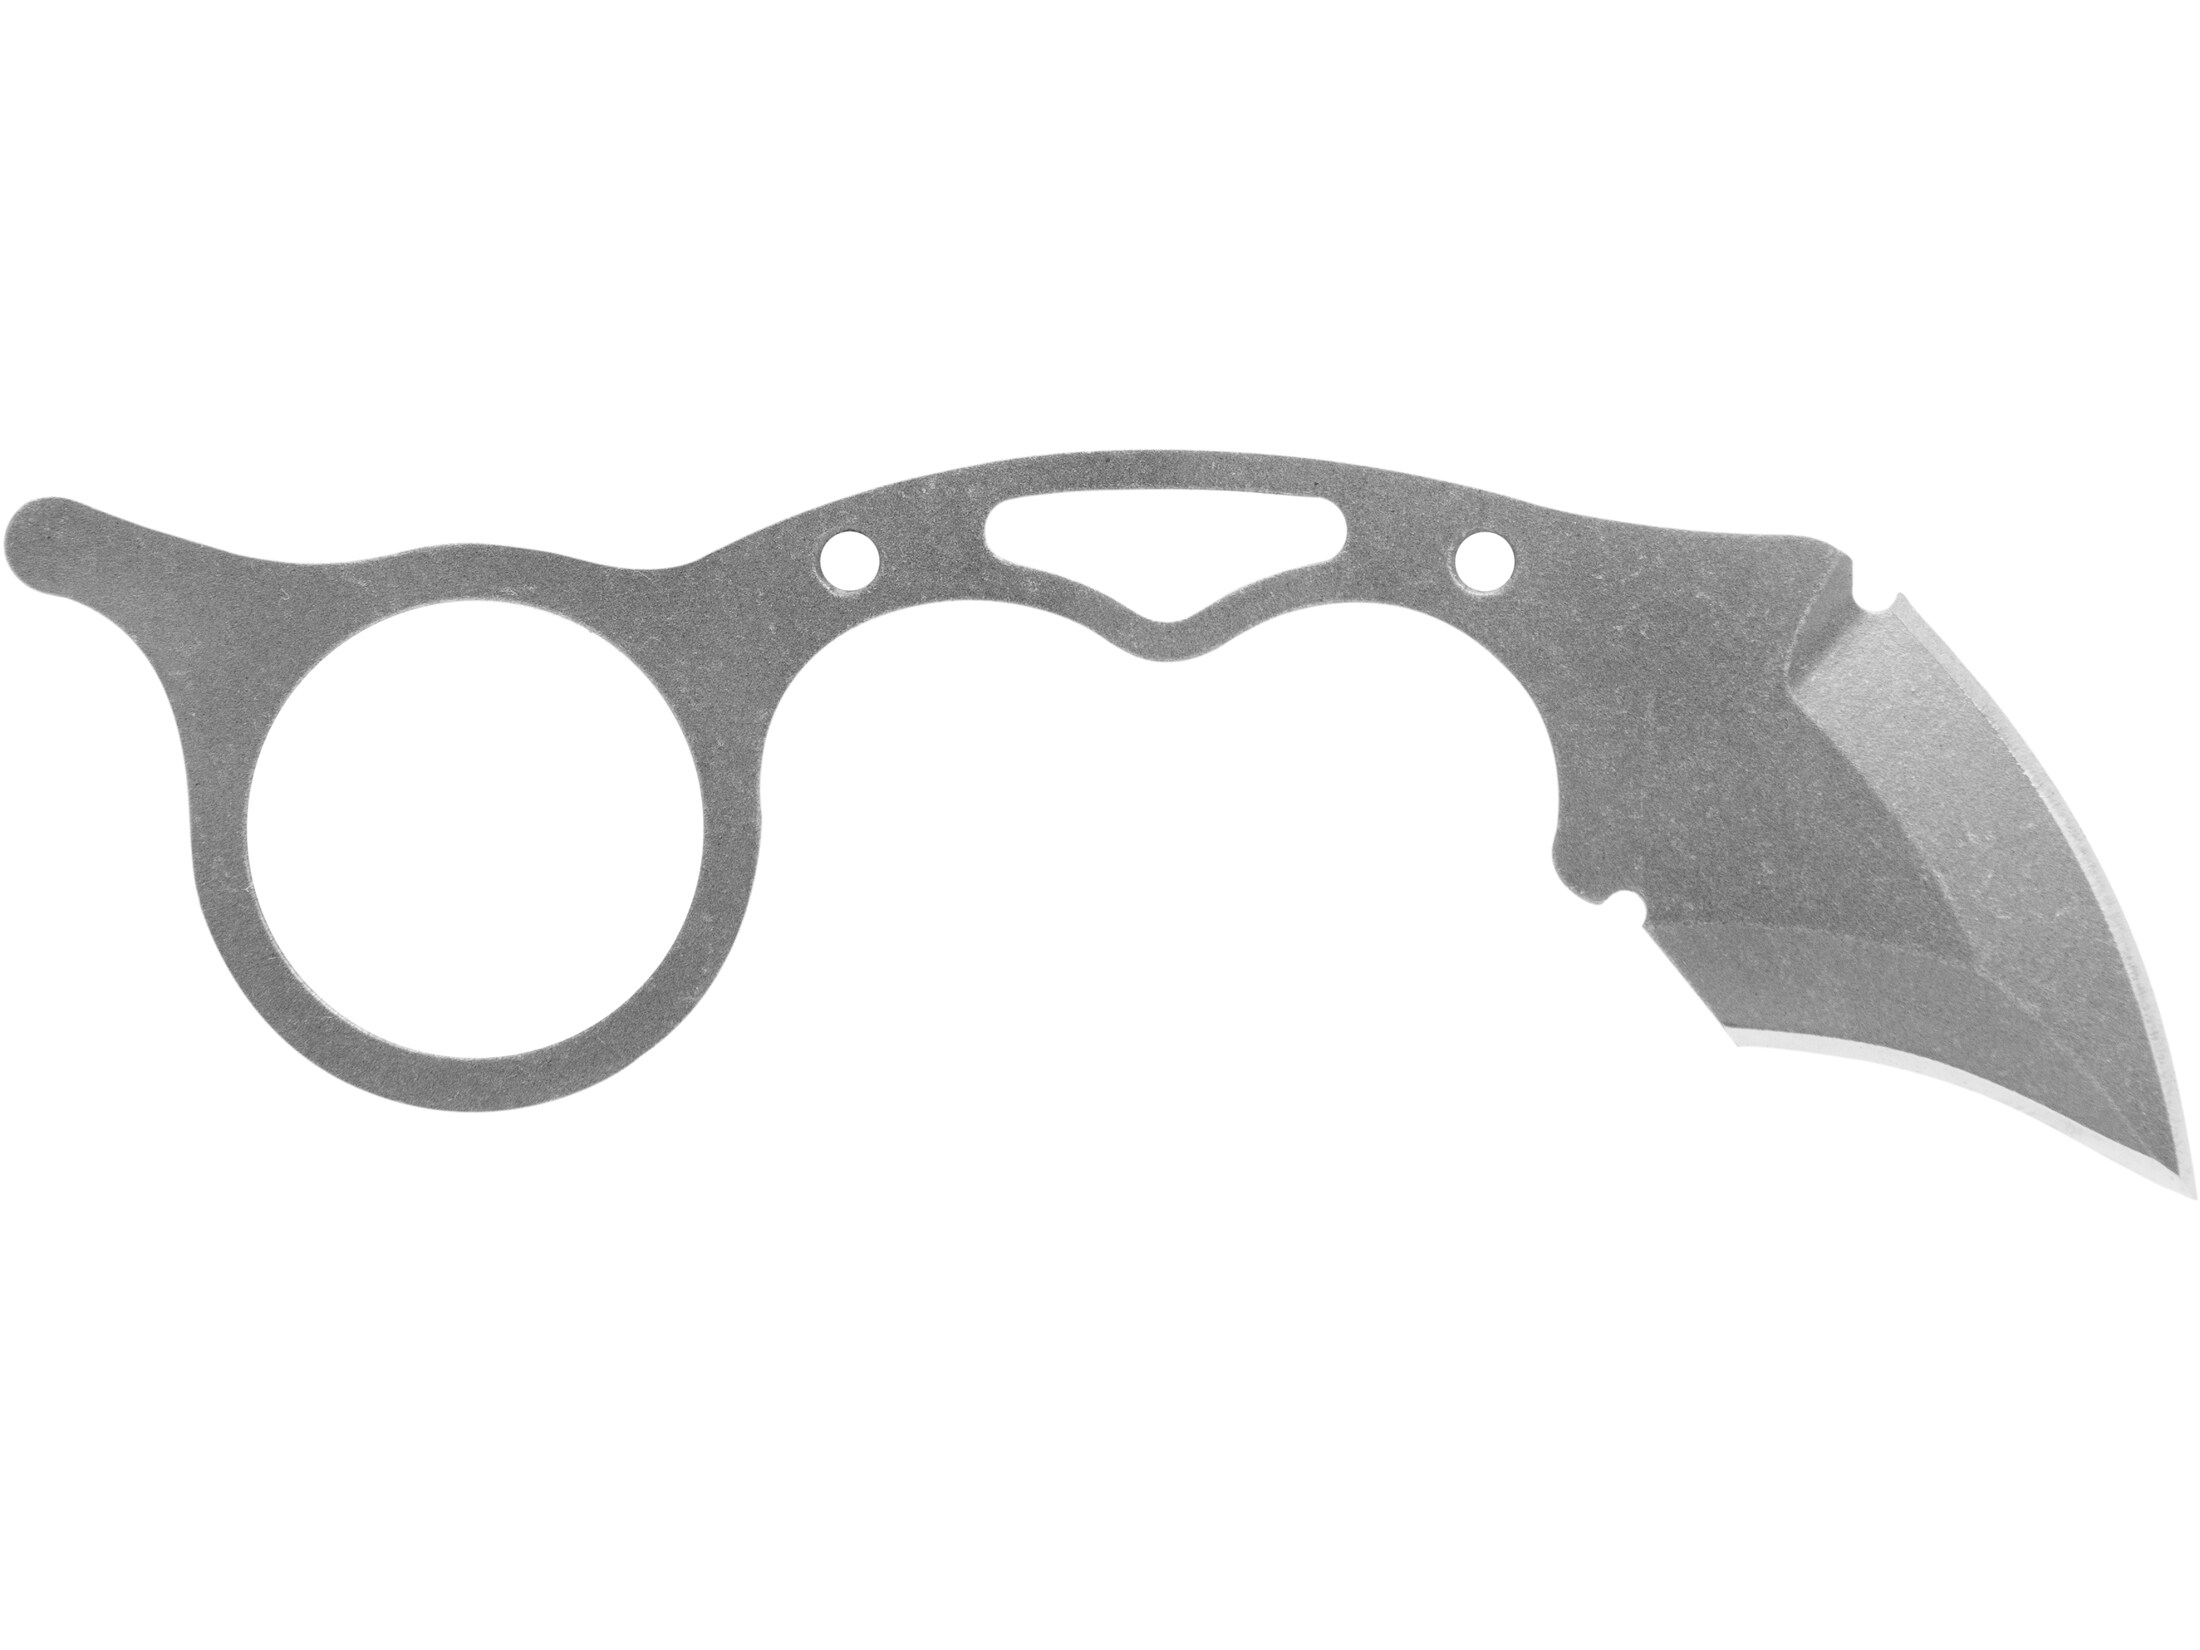 TOPS Knives Quickie Fixed Blade Knife 1.63″ Hawkbill 1095 Steel Blade Skeletonized Handle For Sale